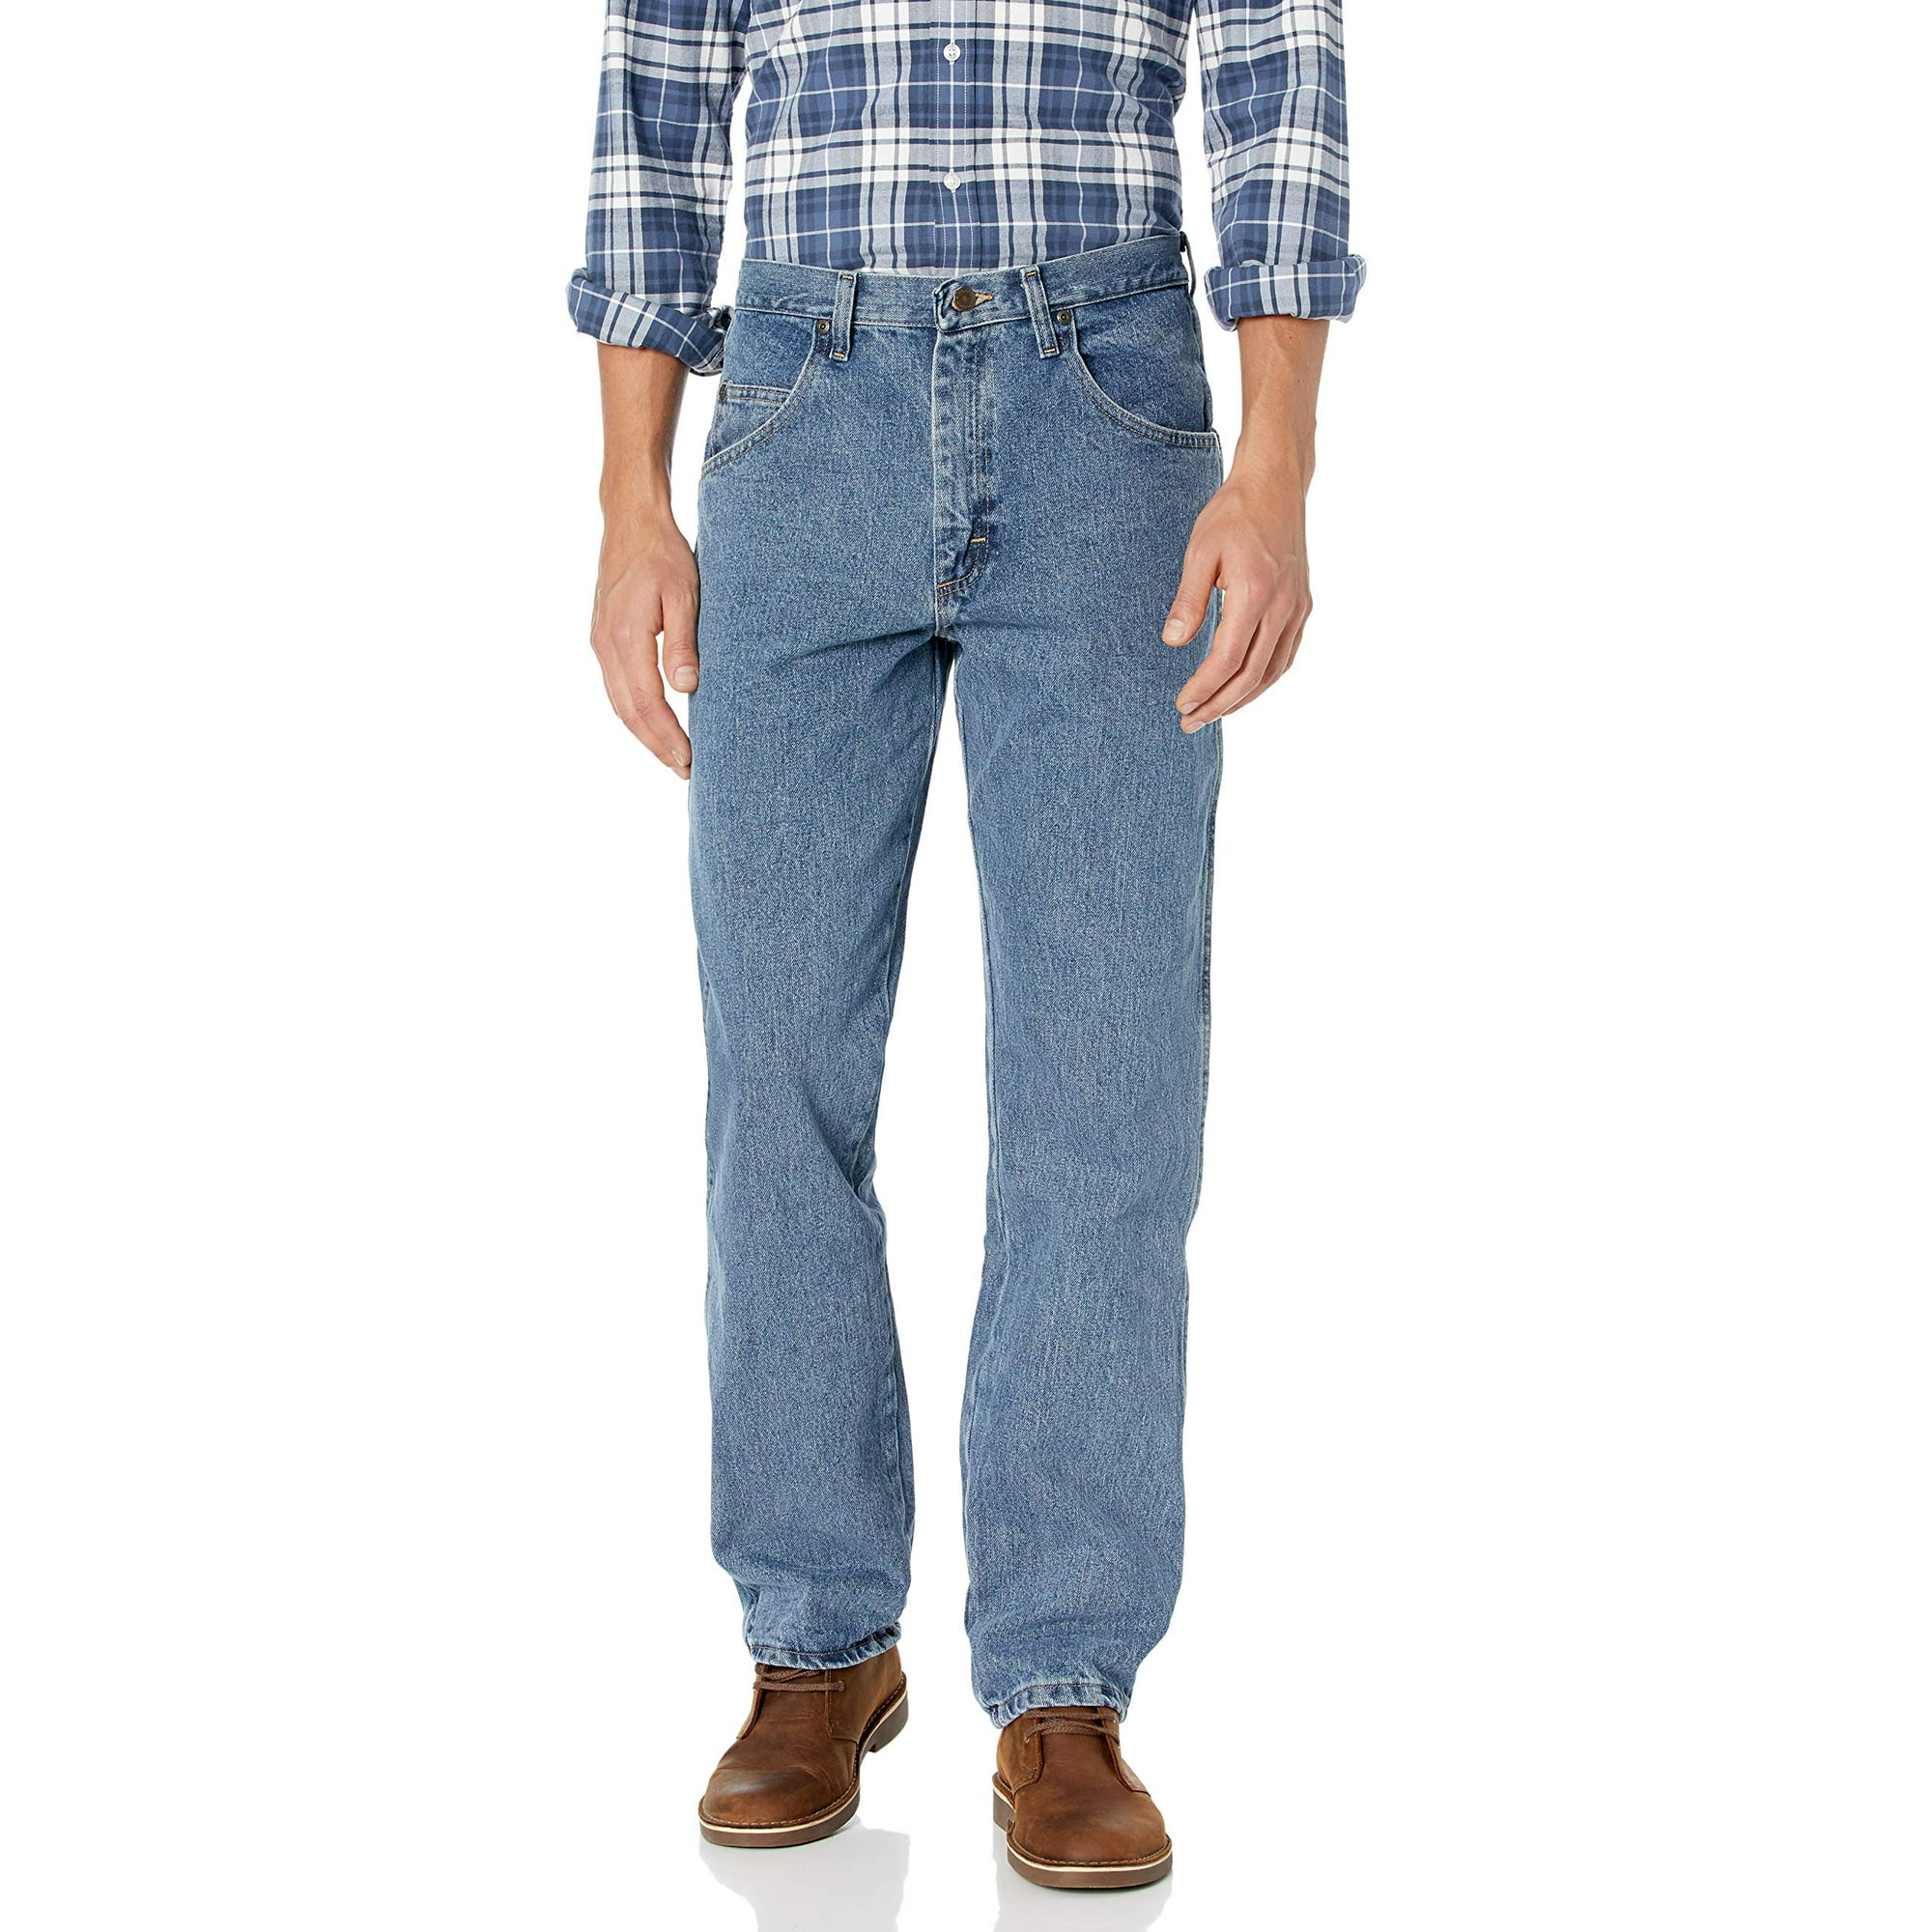 Wrangler Men's Rugged Wear Jean, Grey Indigo, 44x30 | Walmart Canada